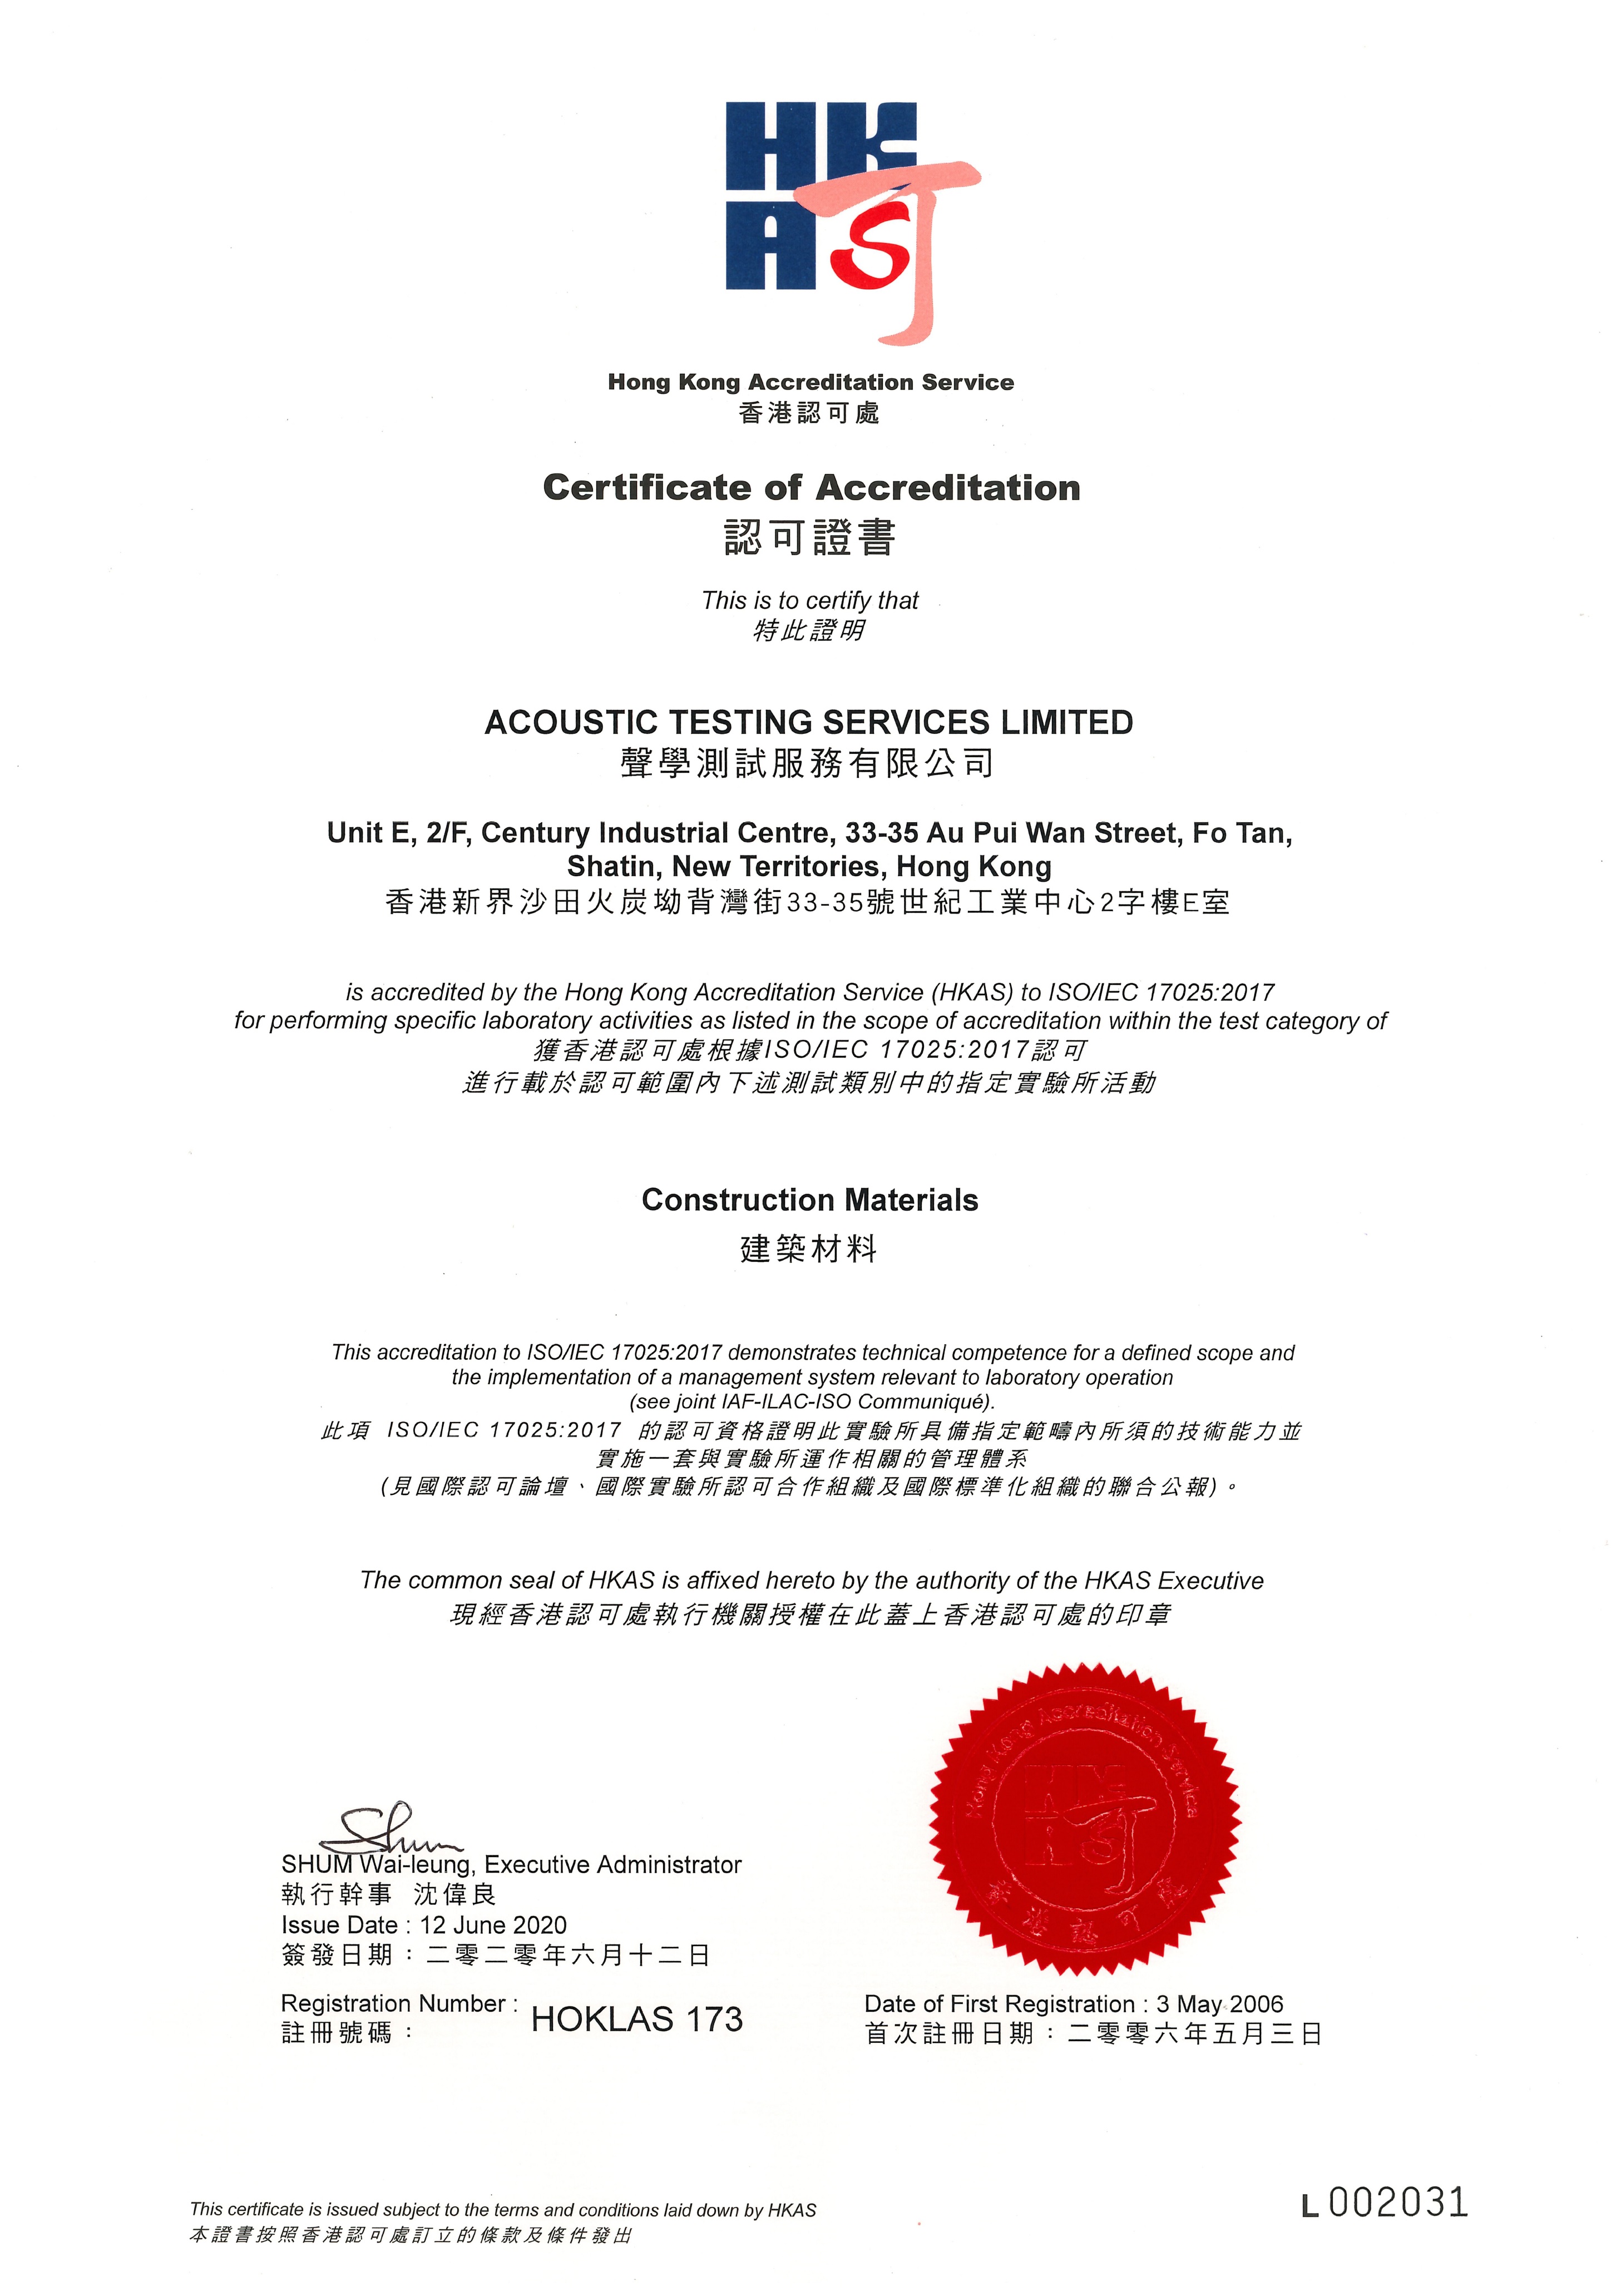 HOKLAS Certificate